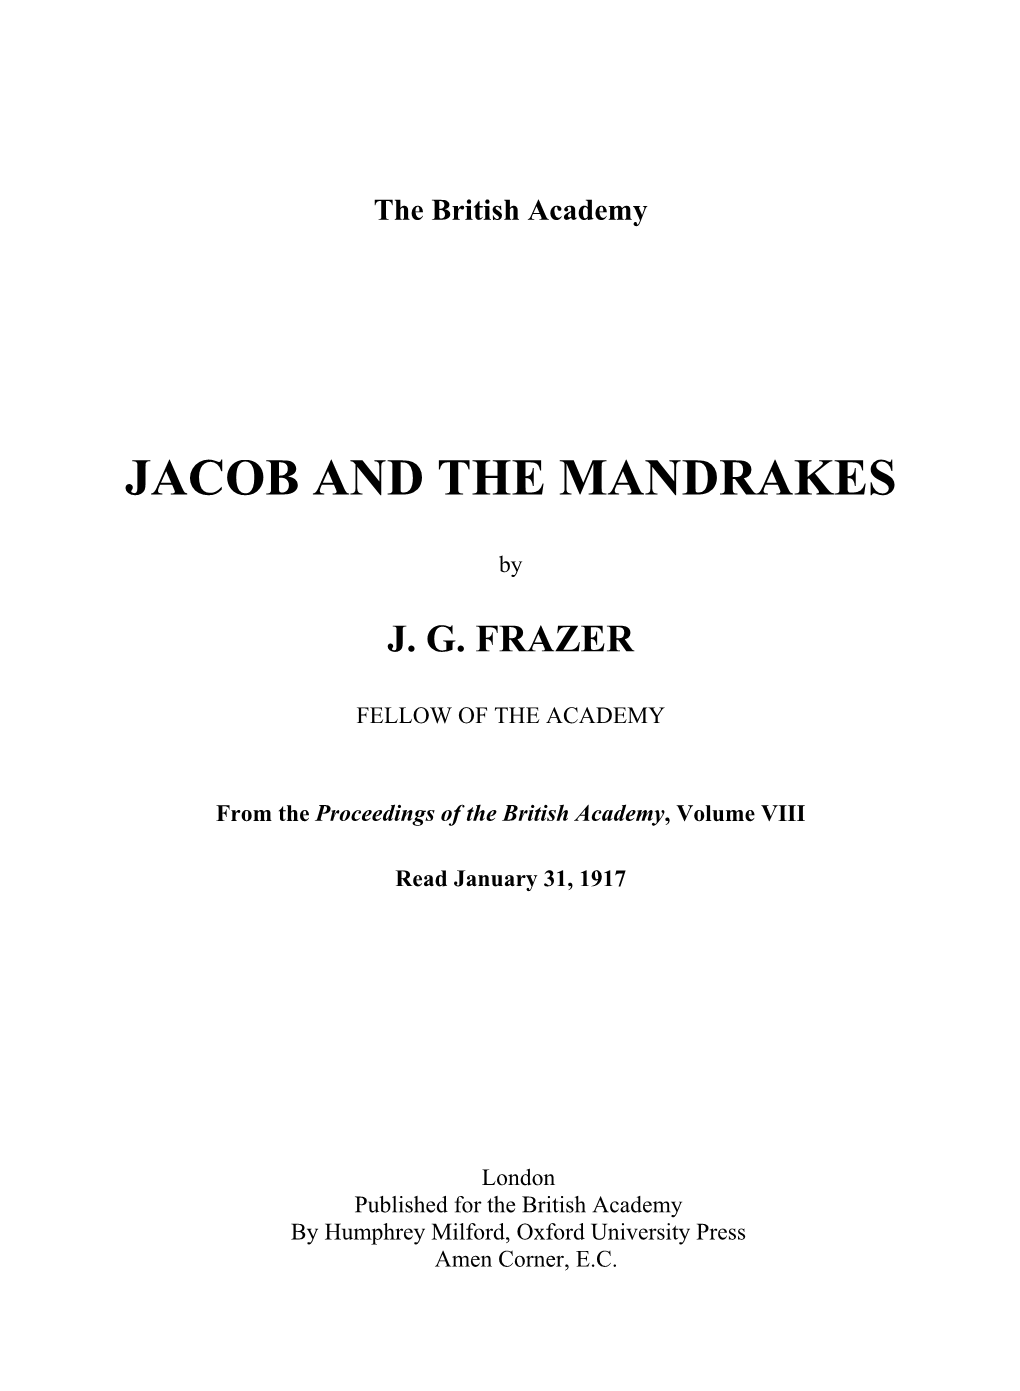 Jacob and the Mandrakes